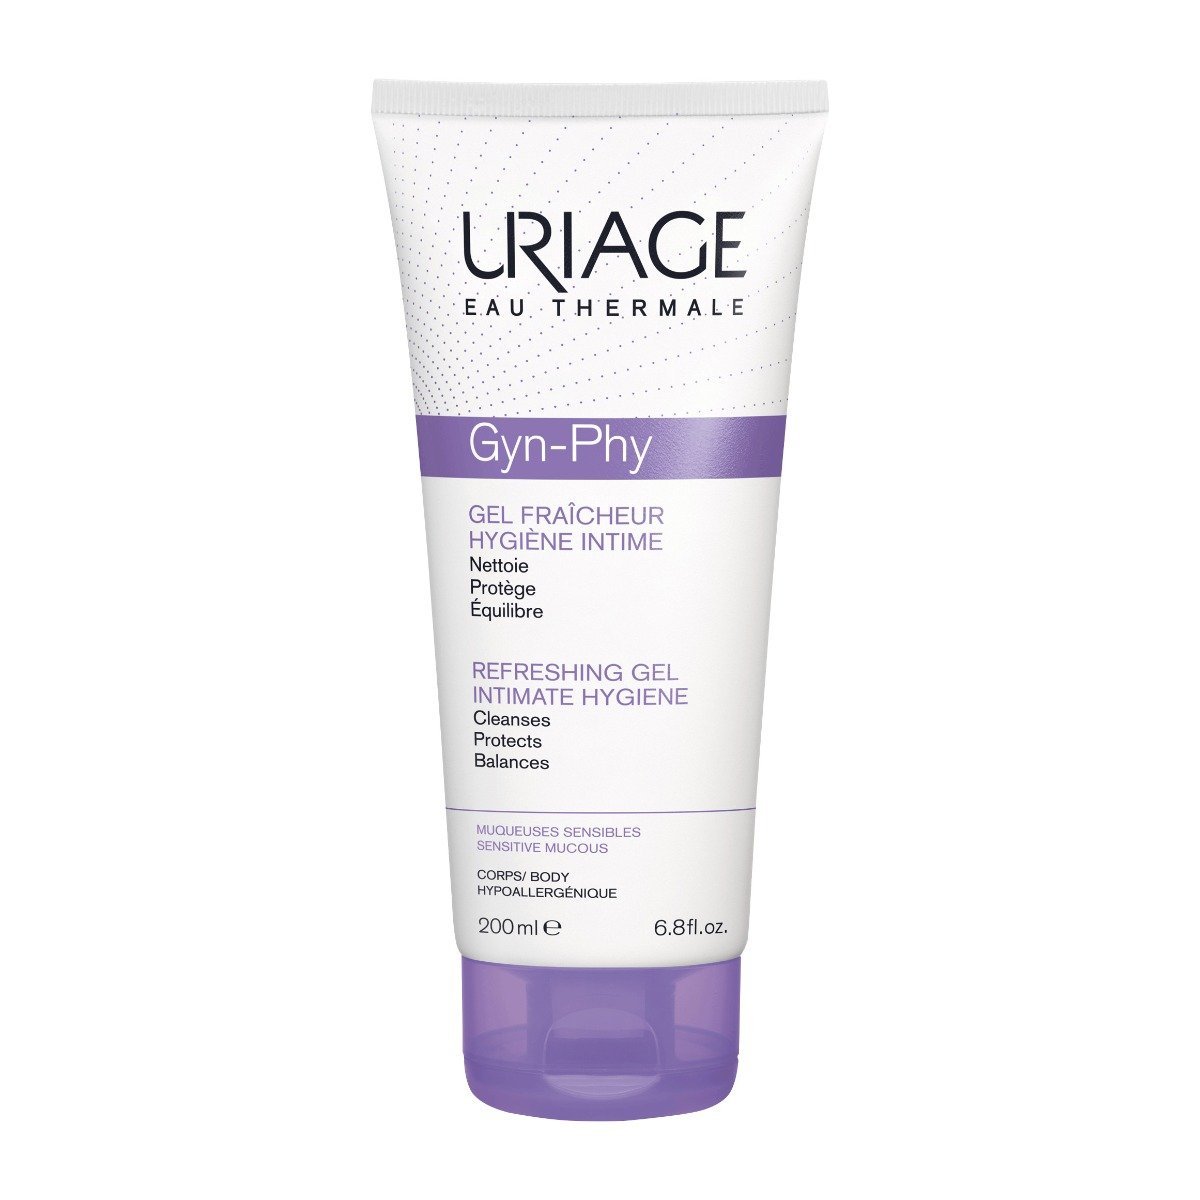 Uriage Gyn-Phy Refreshing Gel Intimate Hygiene - 200ml - Bloom Pharmacy